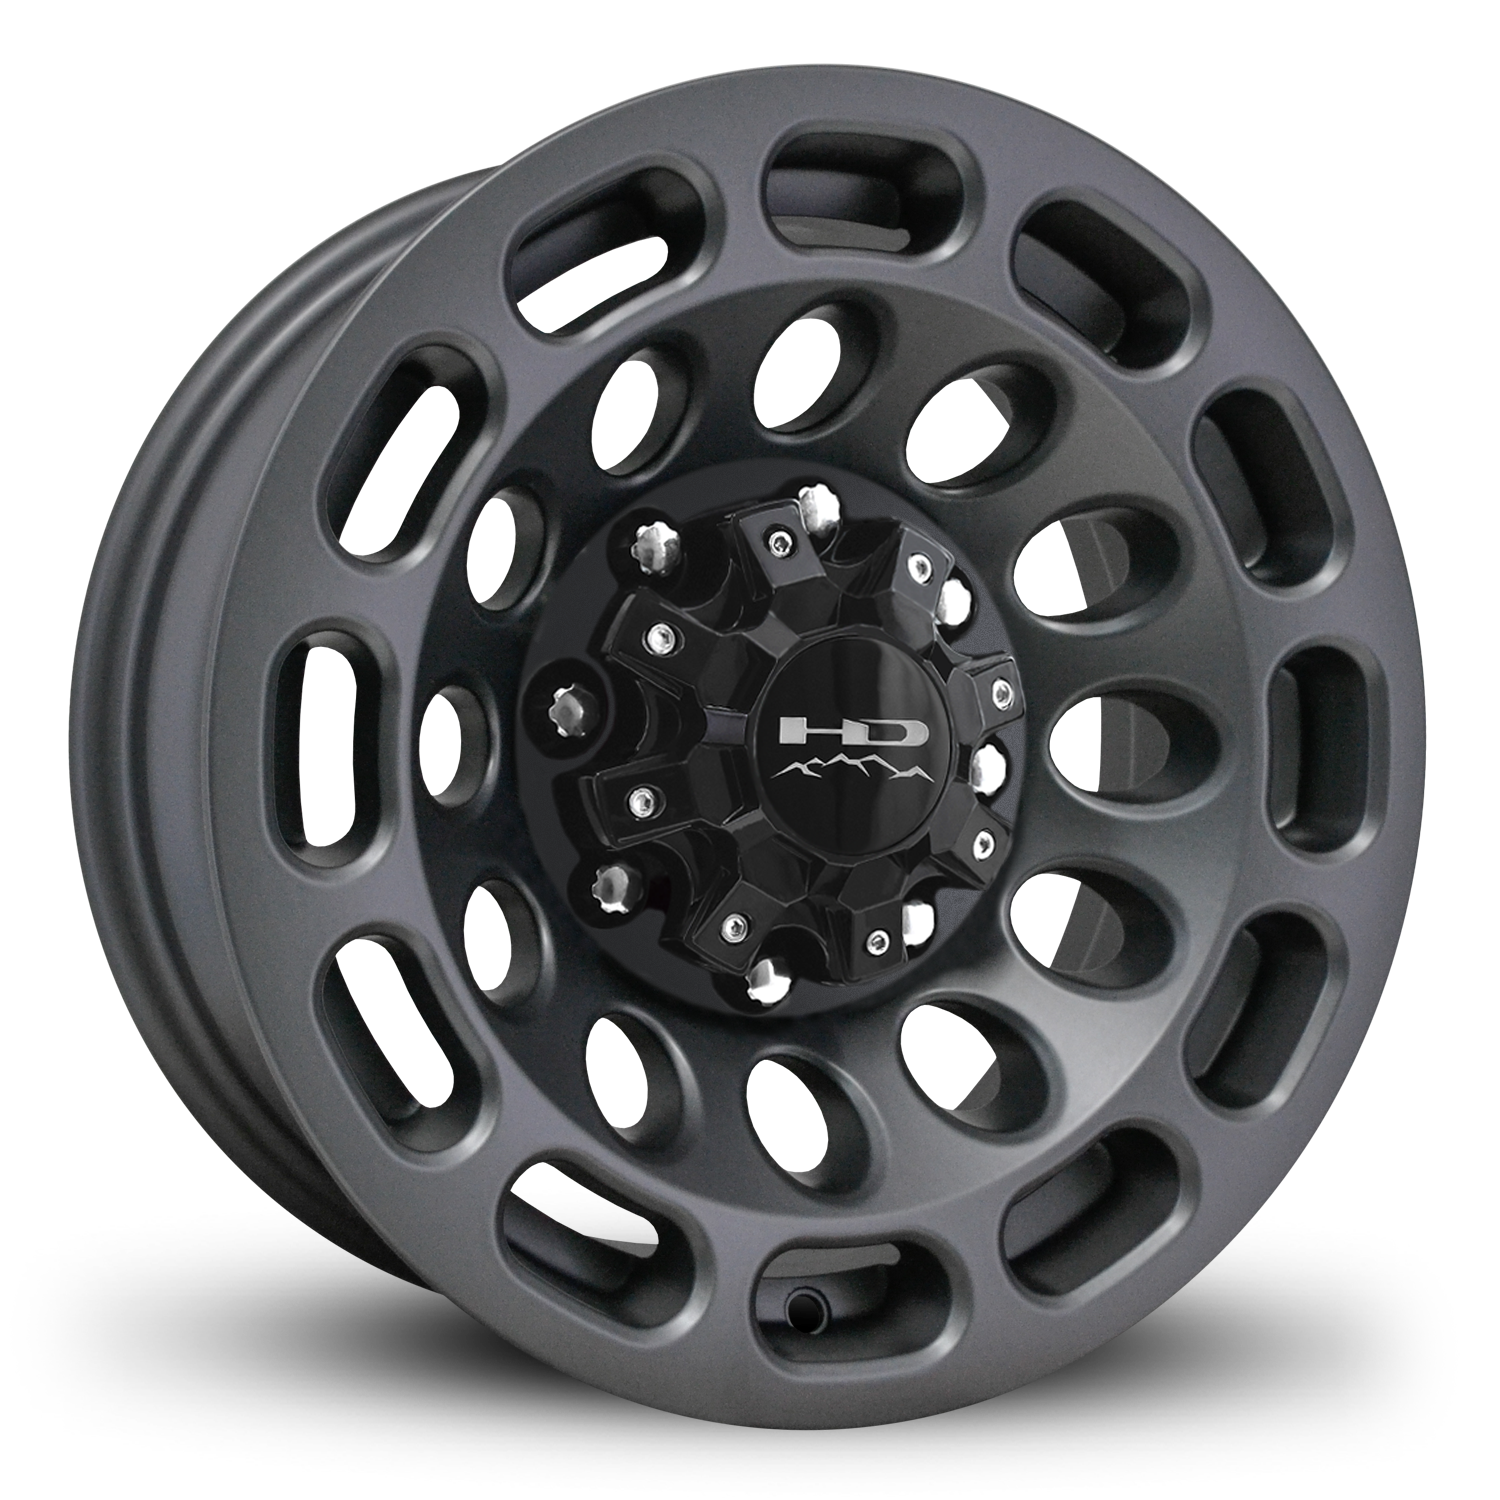 HD Off-Road Road Warrior Custom Trailer Wheels in 16x6.0 in 8 lug All Satin Grey for Unility, Boat, Car, Construction, Horse, & RV